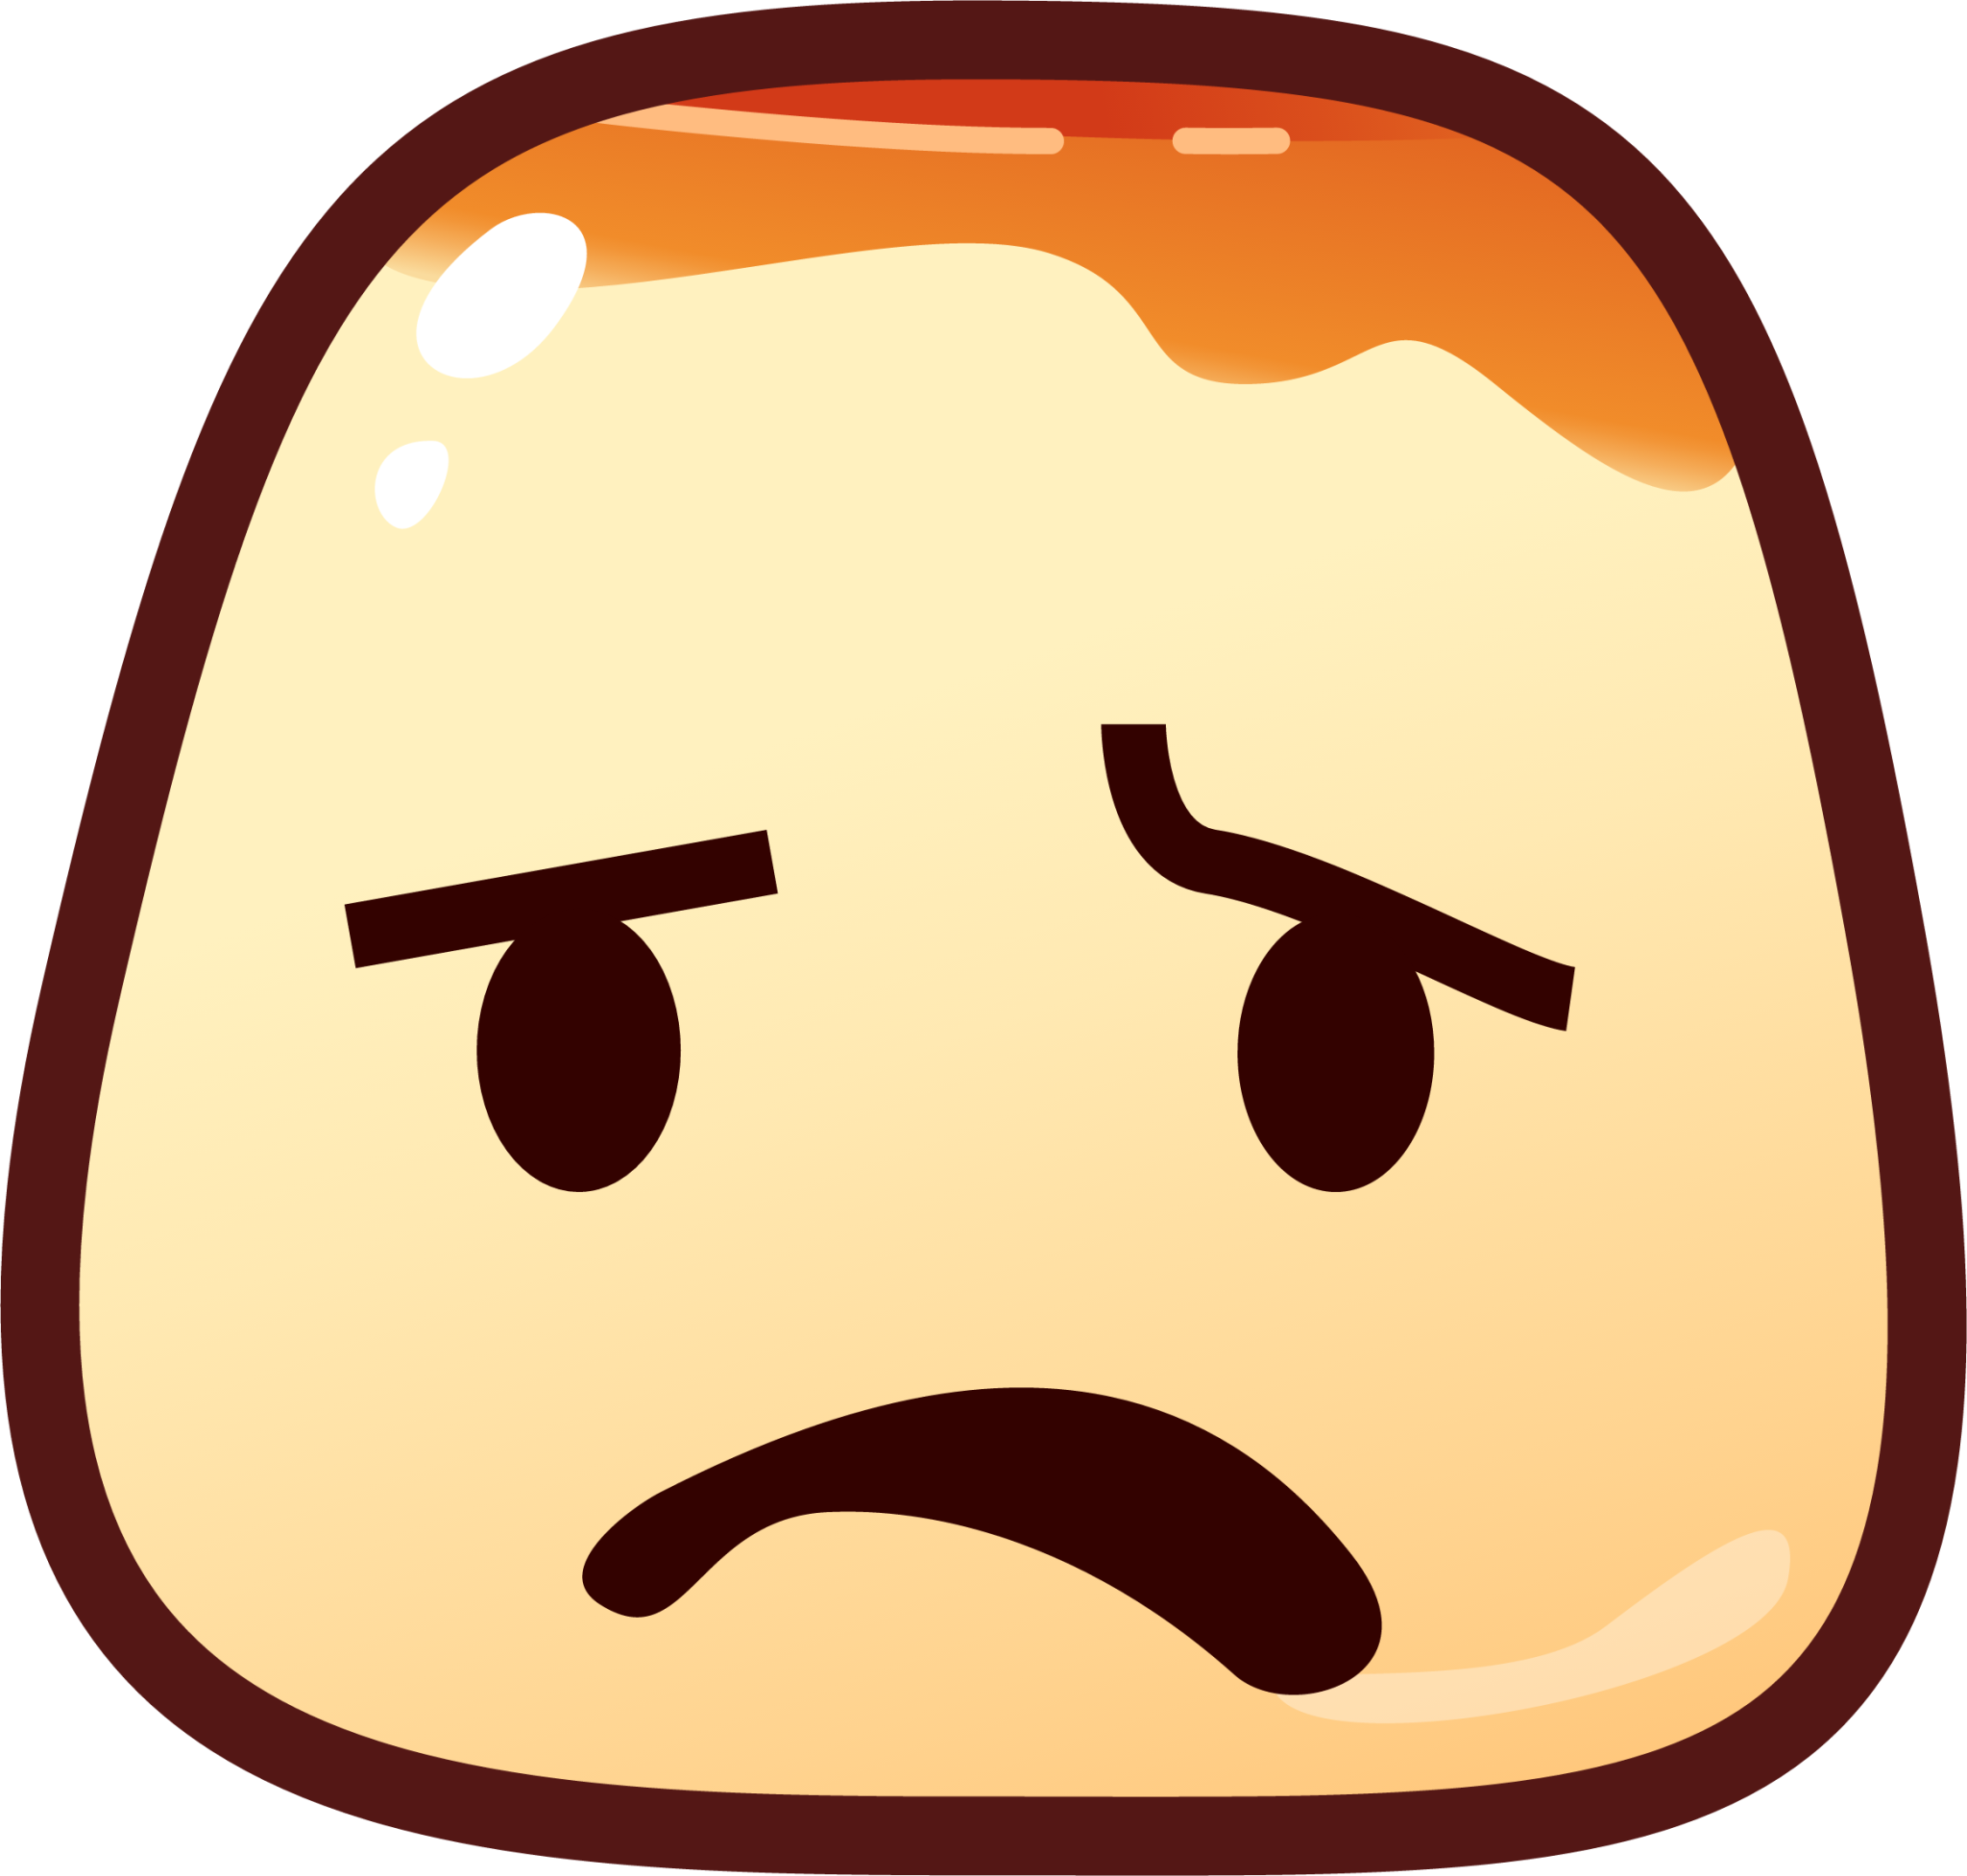 anguished (pudding) emoji